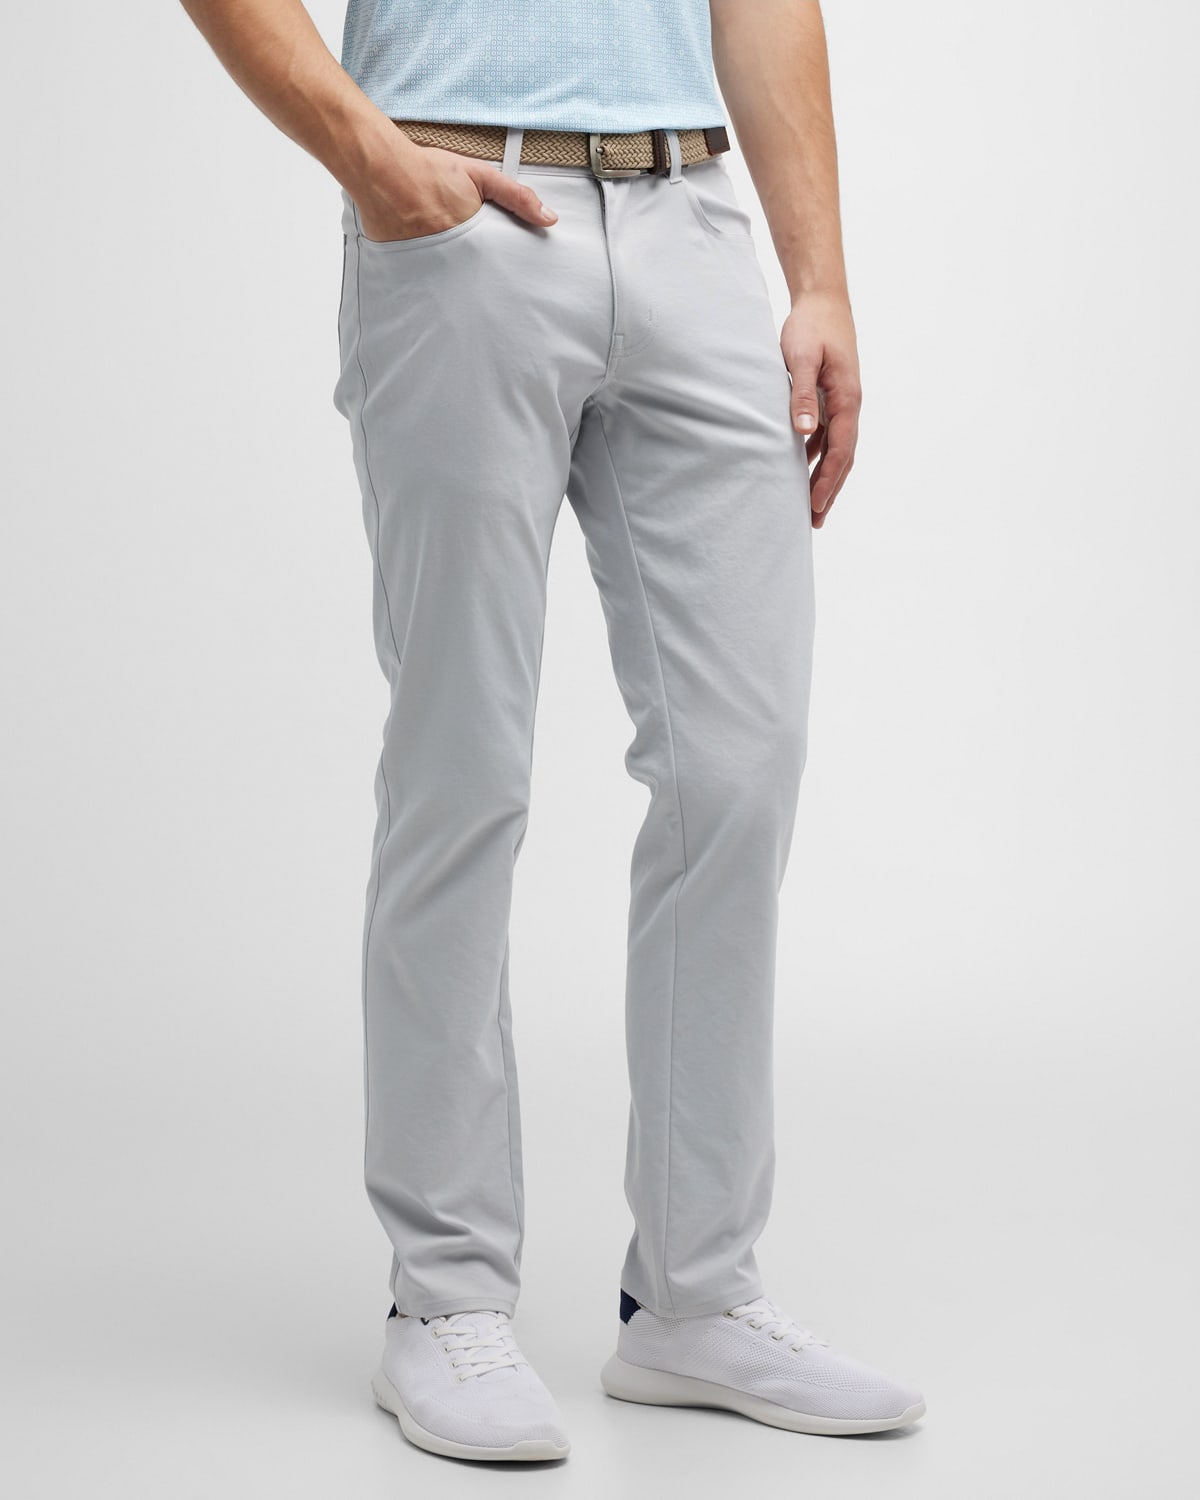 Peter Millar Eb66 Performance 5 Pocket Pant in Gray for Men